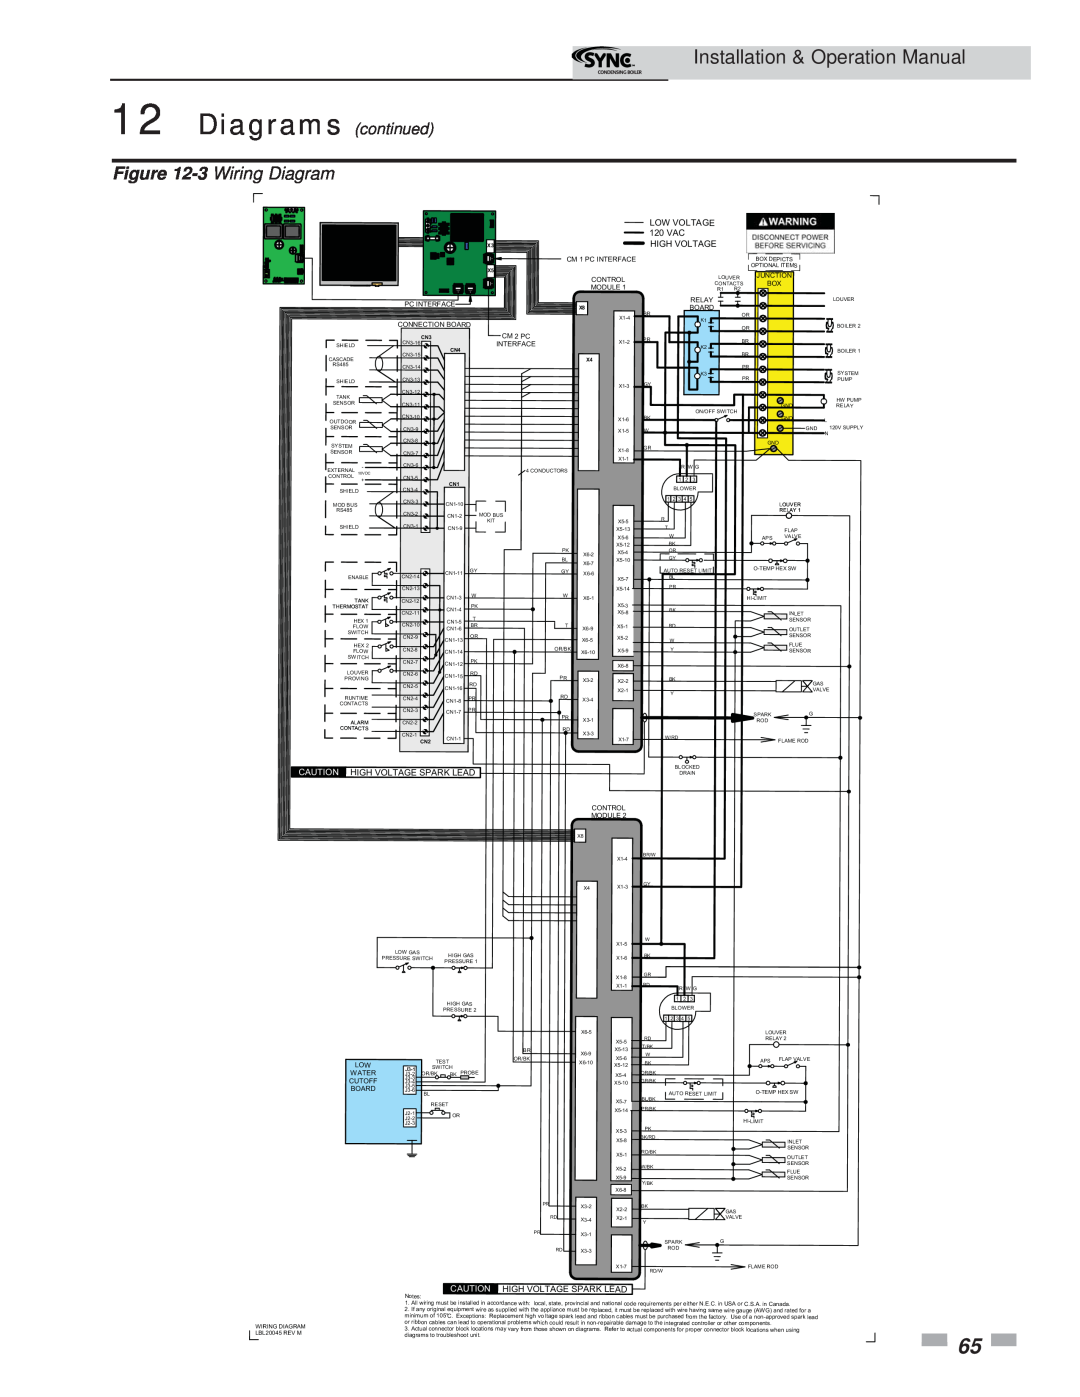 Lochinvar 5 3 Wiring Diagram, Low Voltage, Caution High Voltage Spark Lead, Installation & Operation Manual, 120 VAC 